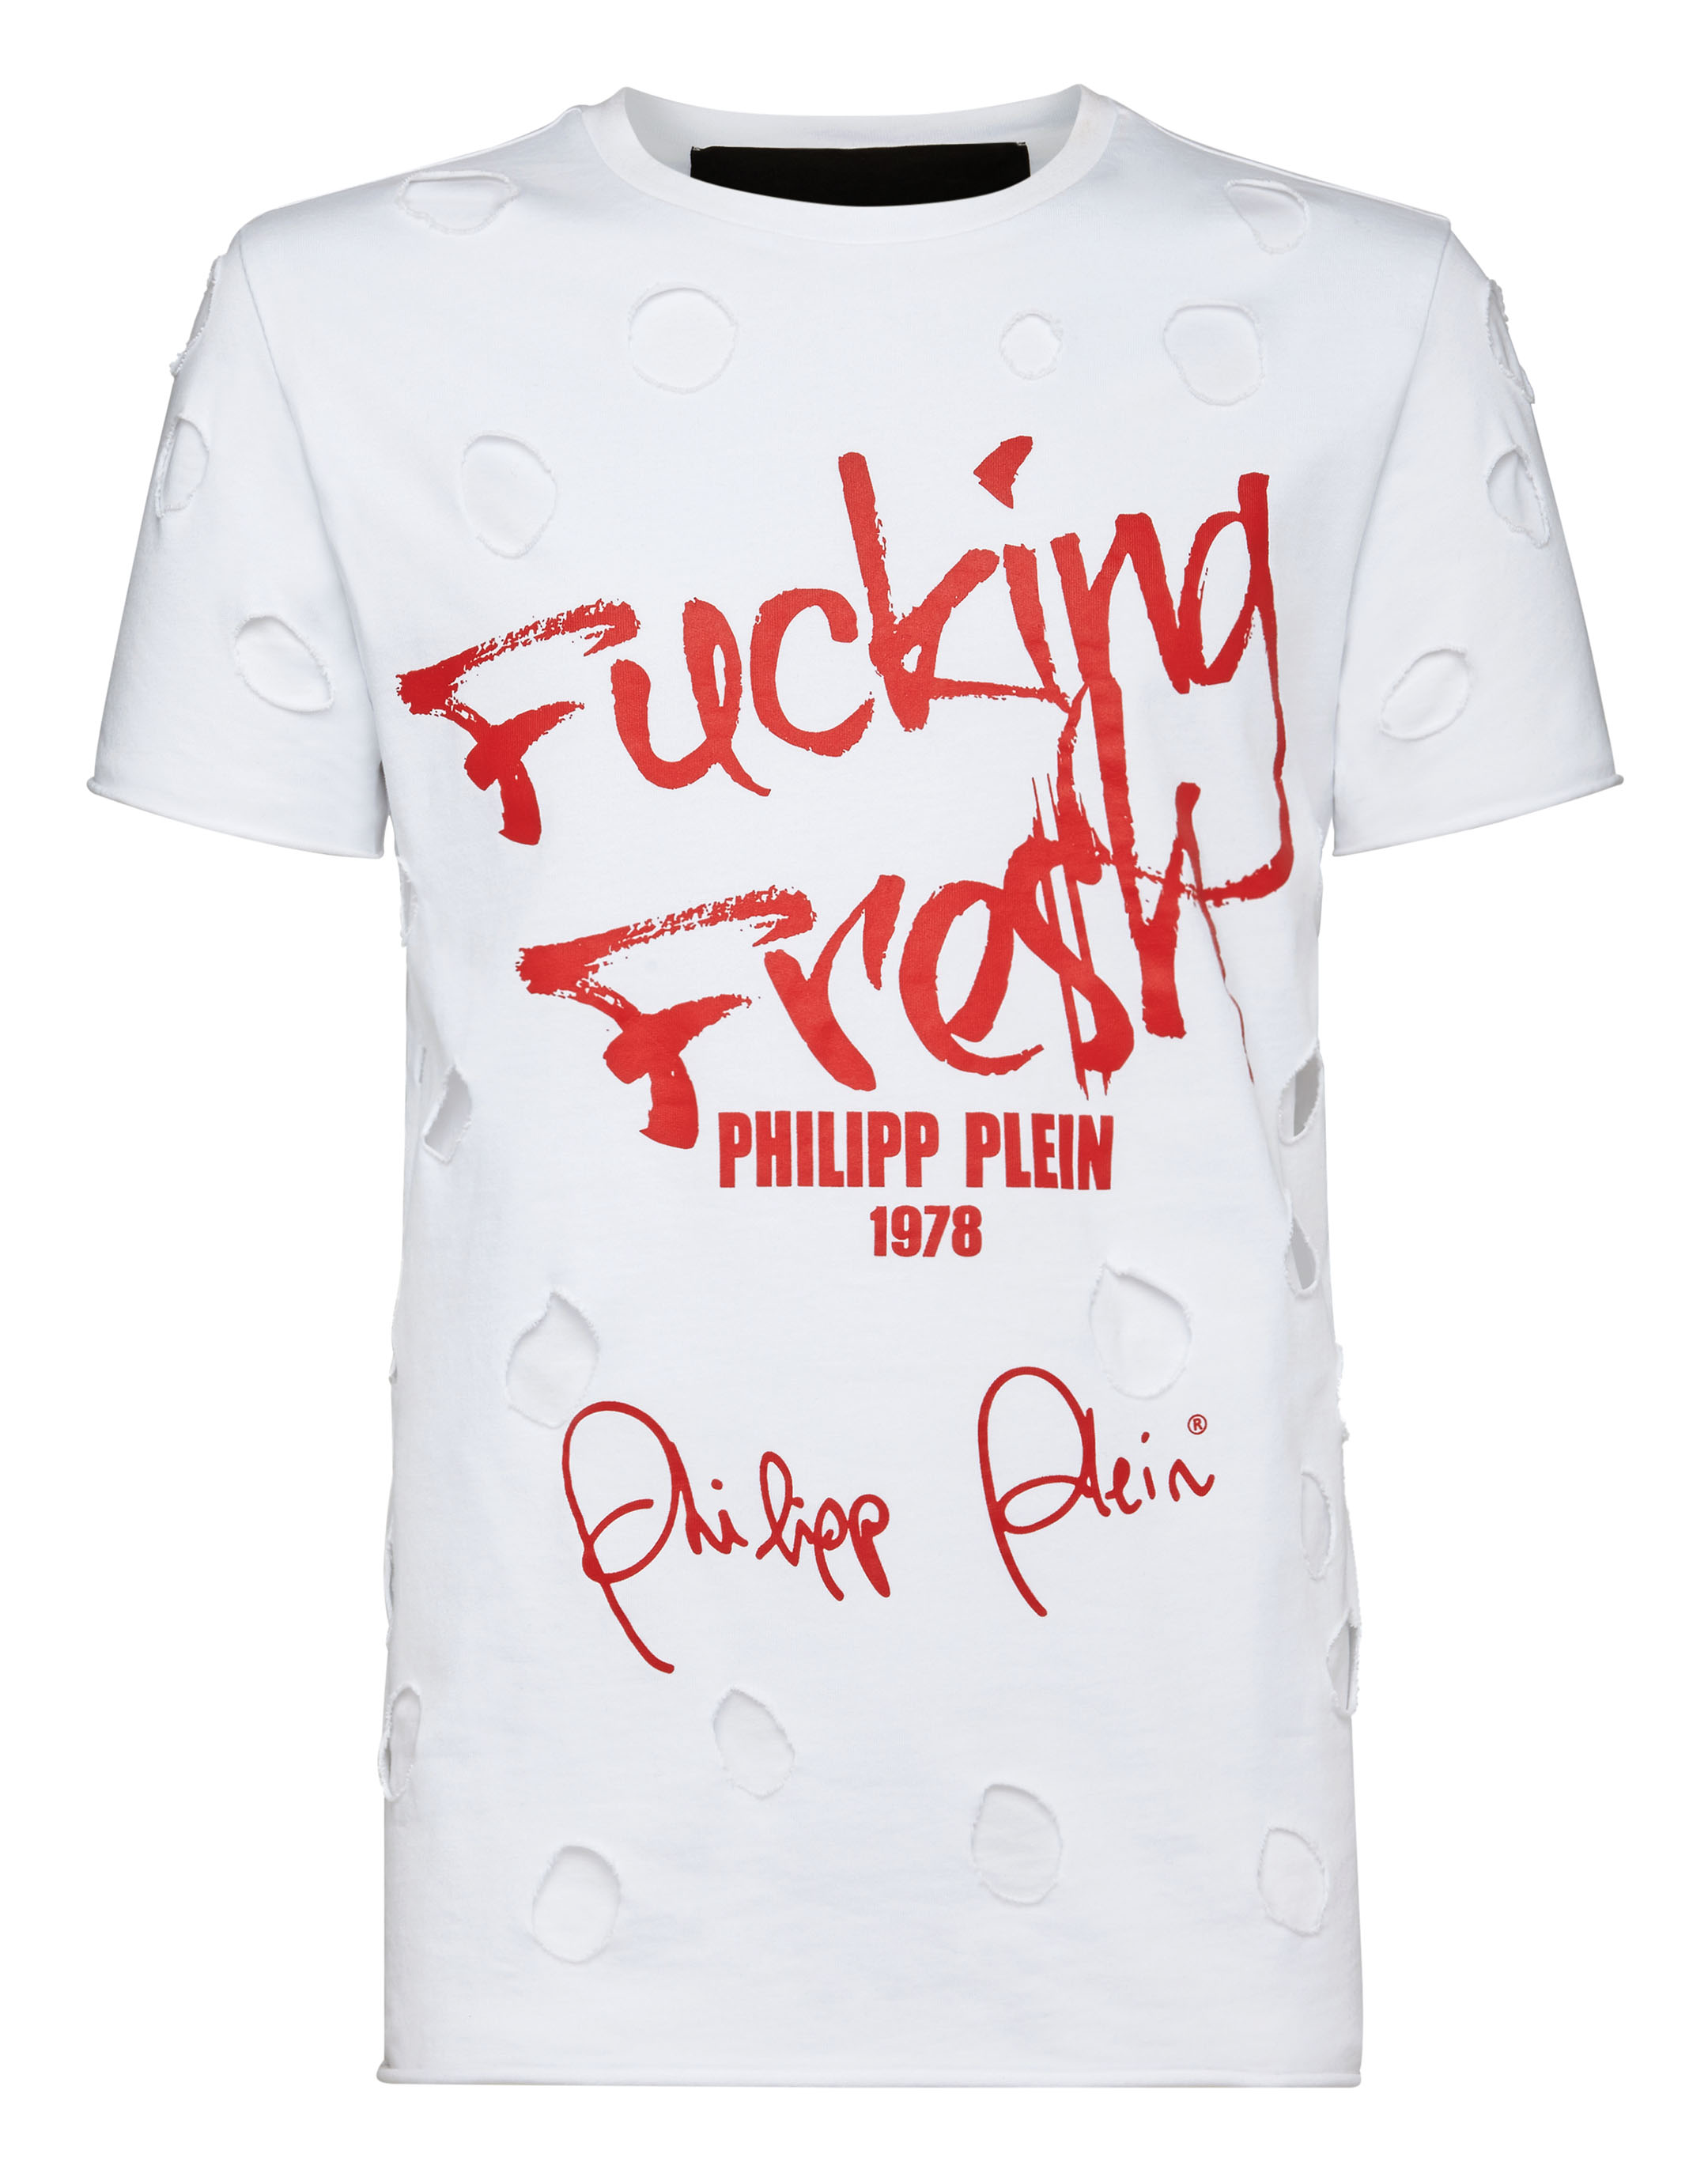 Philipp plein 78 футболка. Philipp plein футболка Crypto. Philipp plein White Shirt with slogan Print on the Collar. T me fresh cc